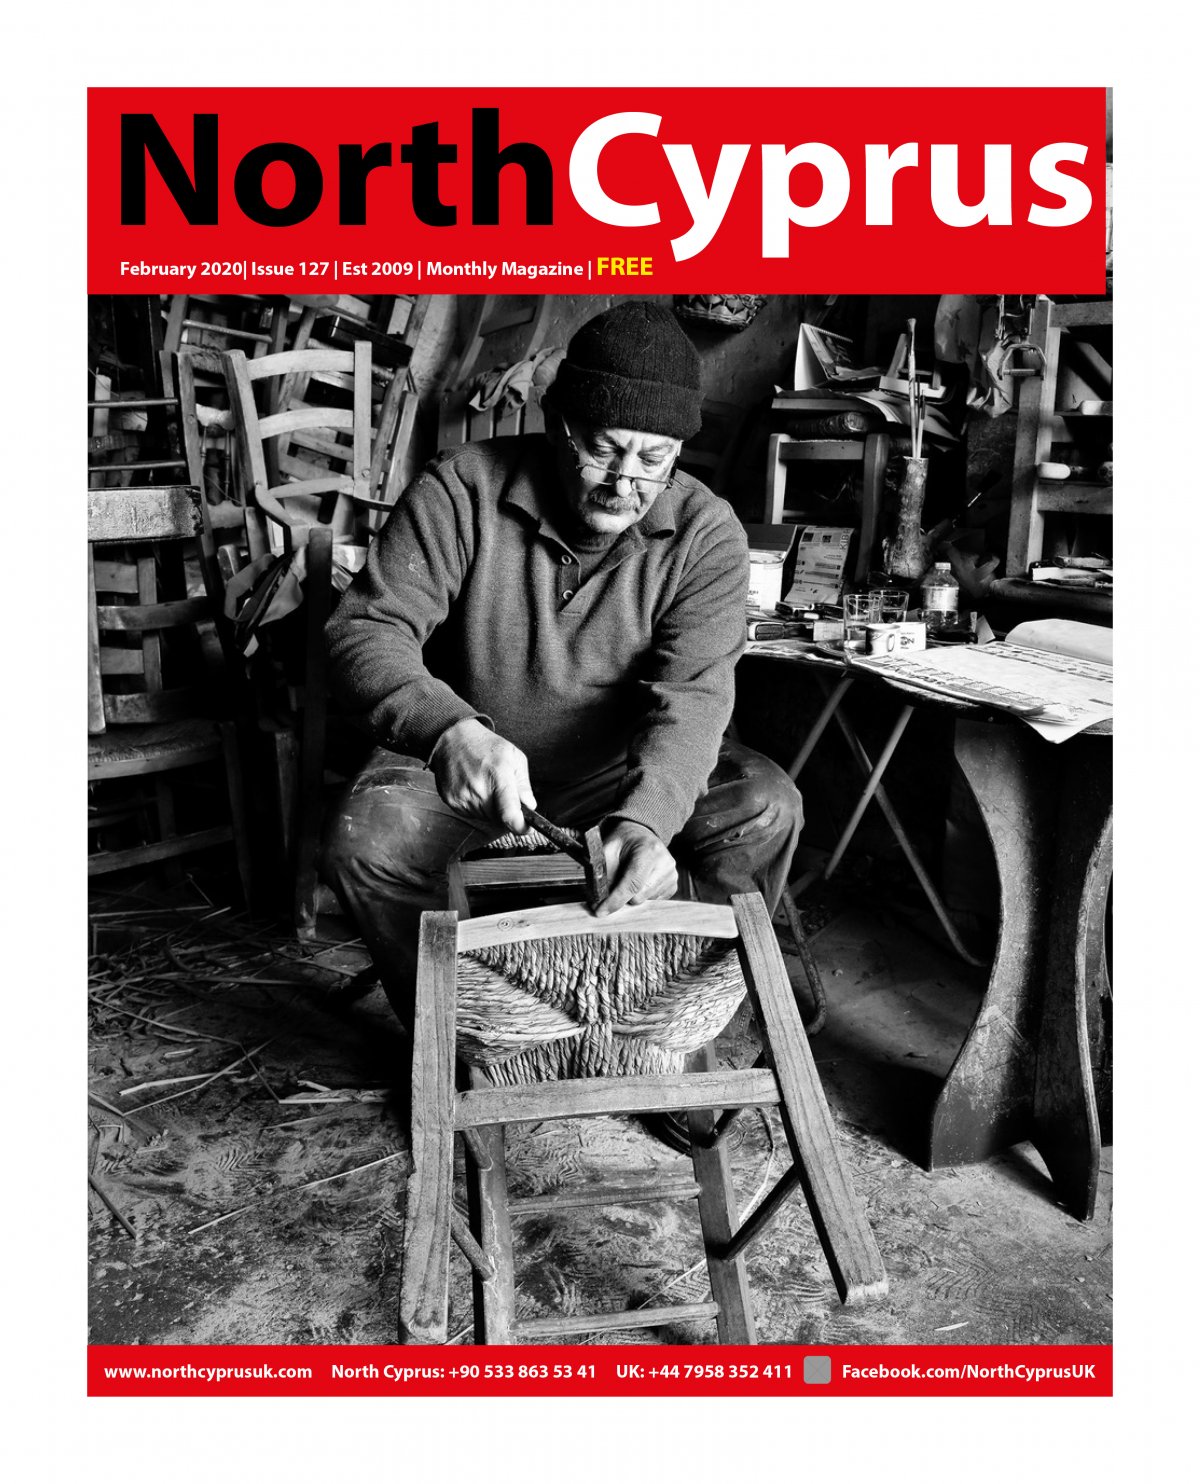 North Cyprus UK - 08.02.2020 Manşeti